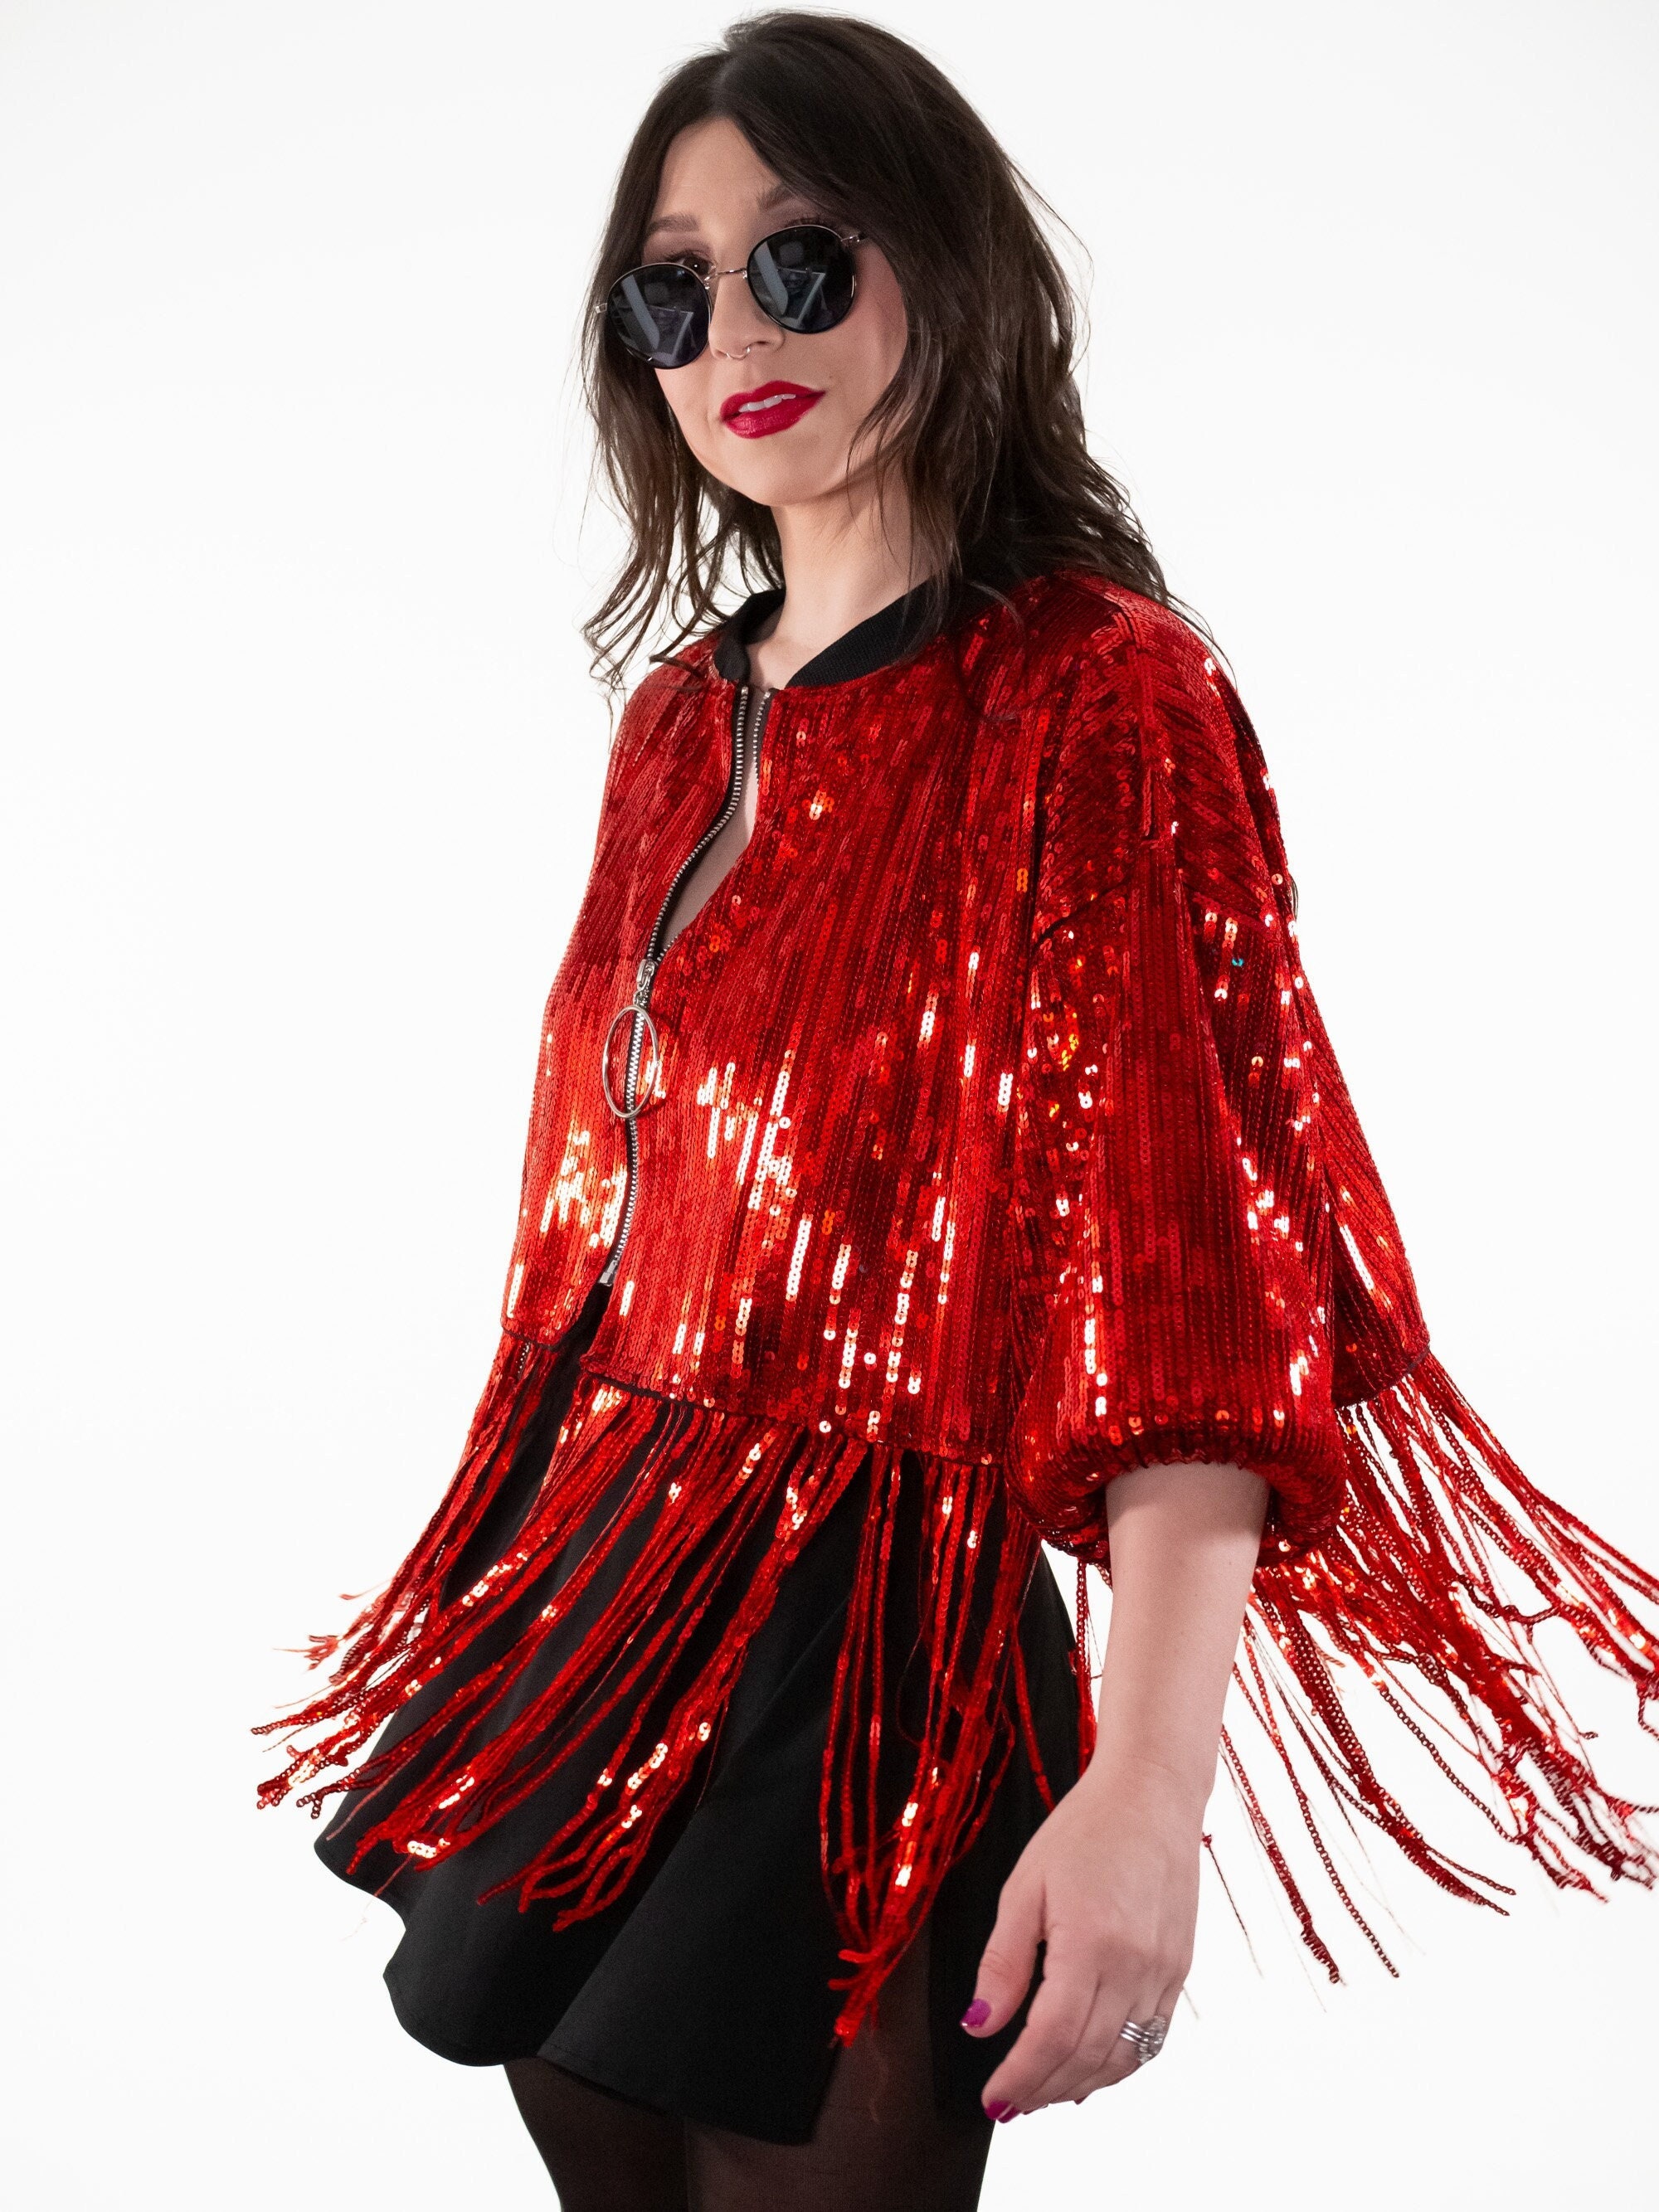 Red Fringe Jumpsuit  Fringe clothing, Online dress shopping, Fashion romper